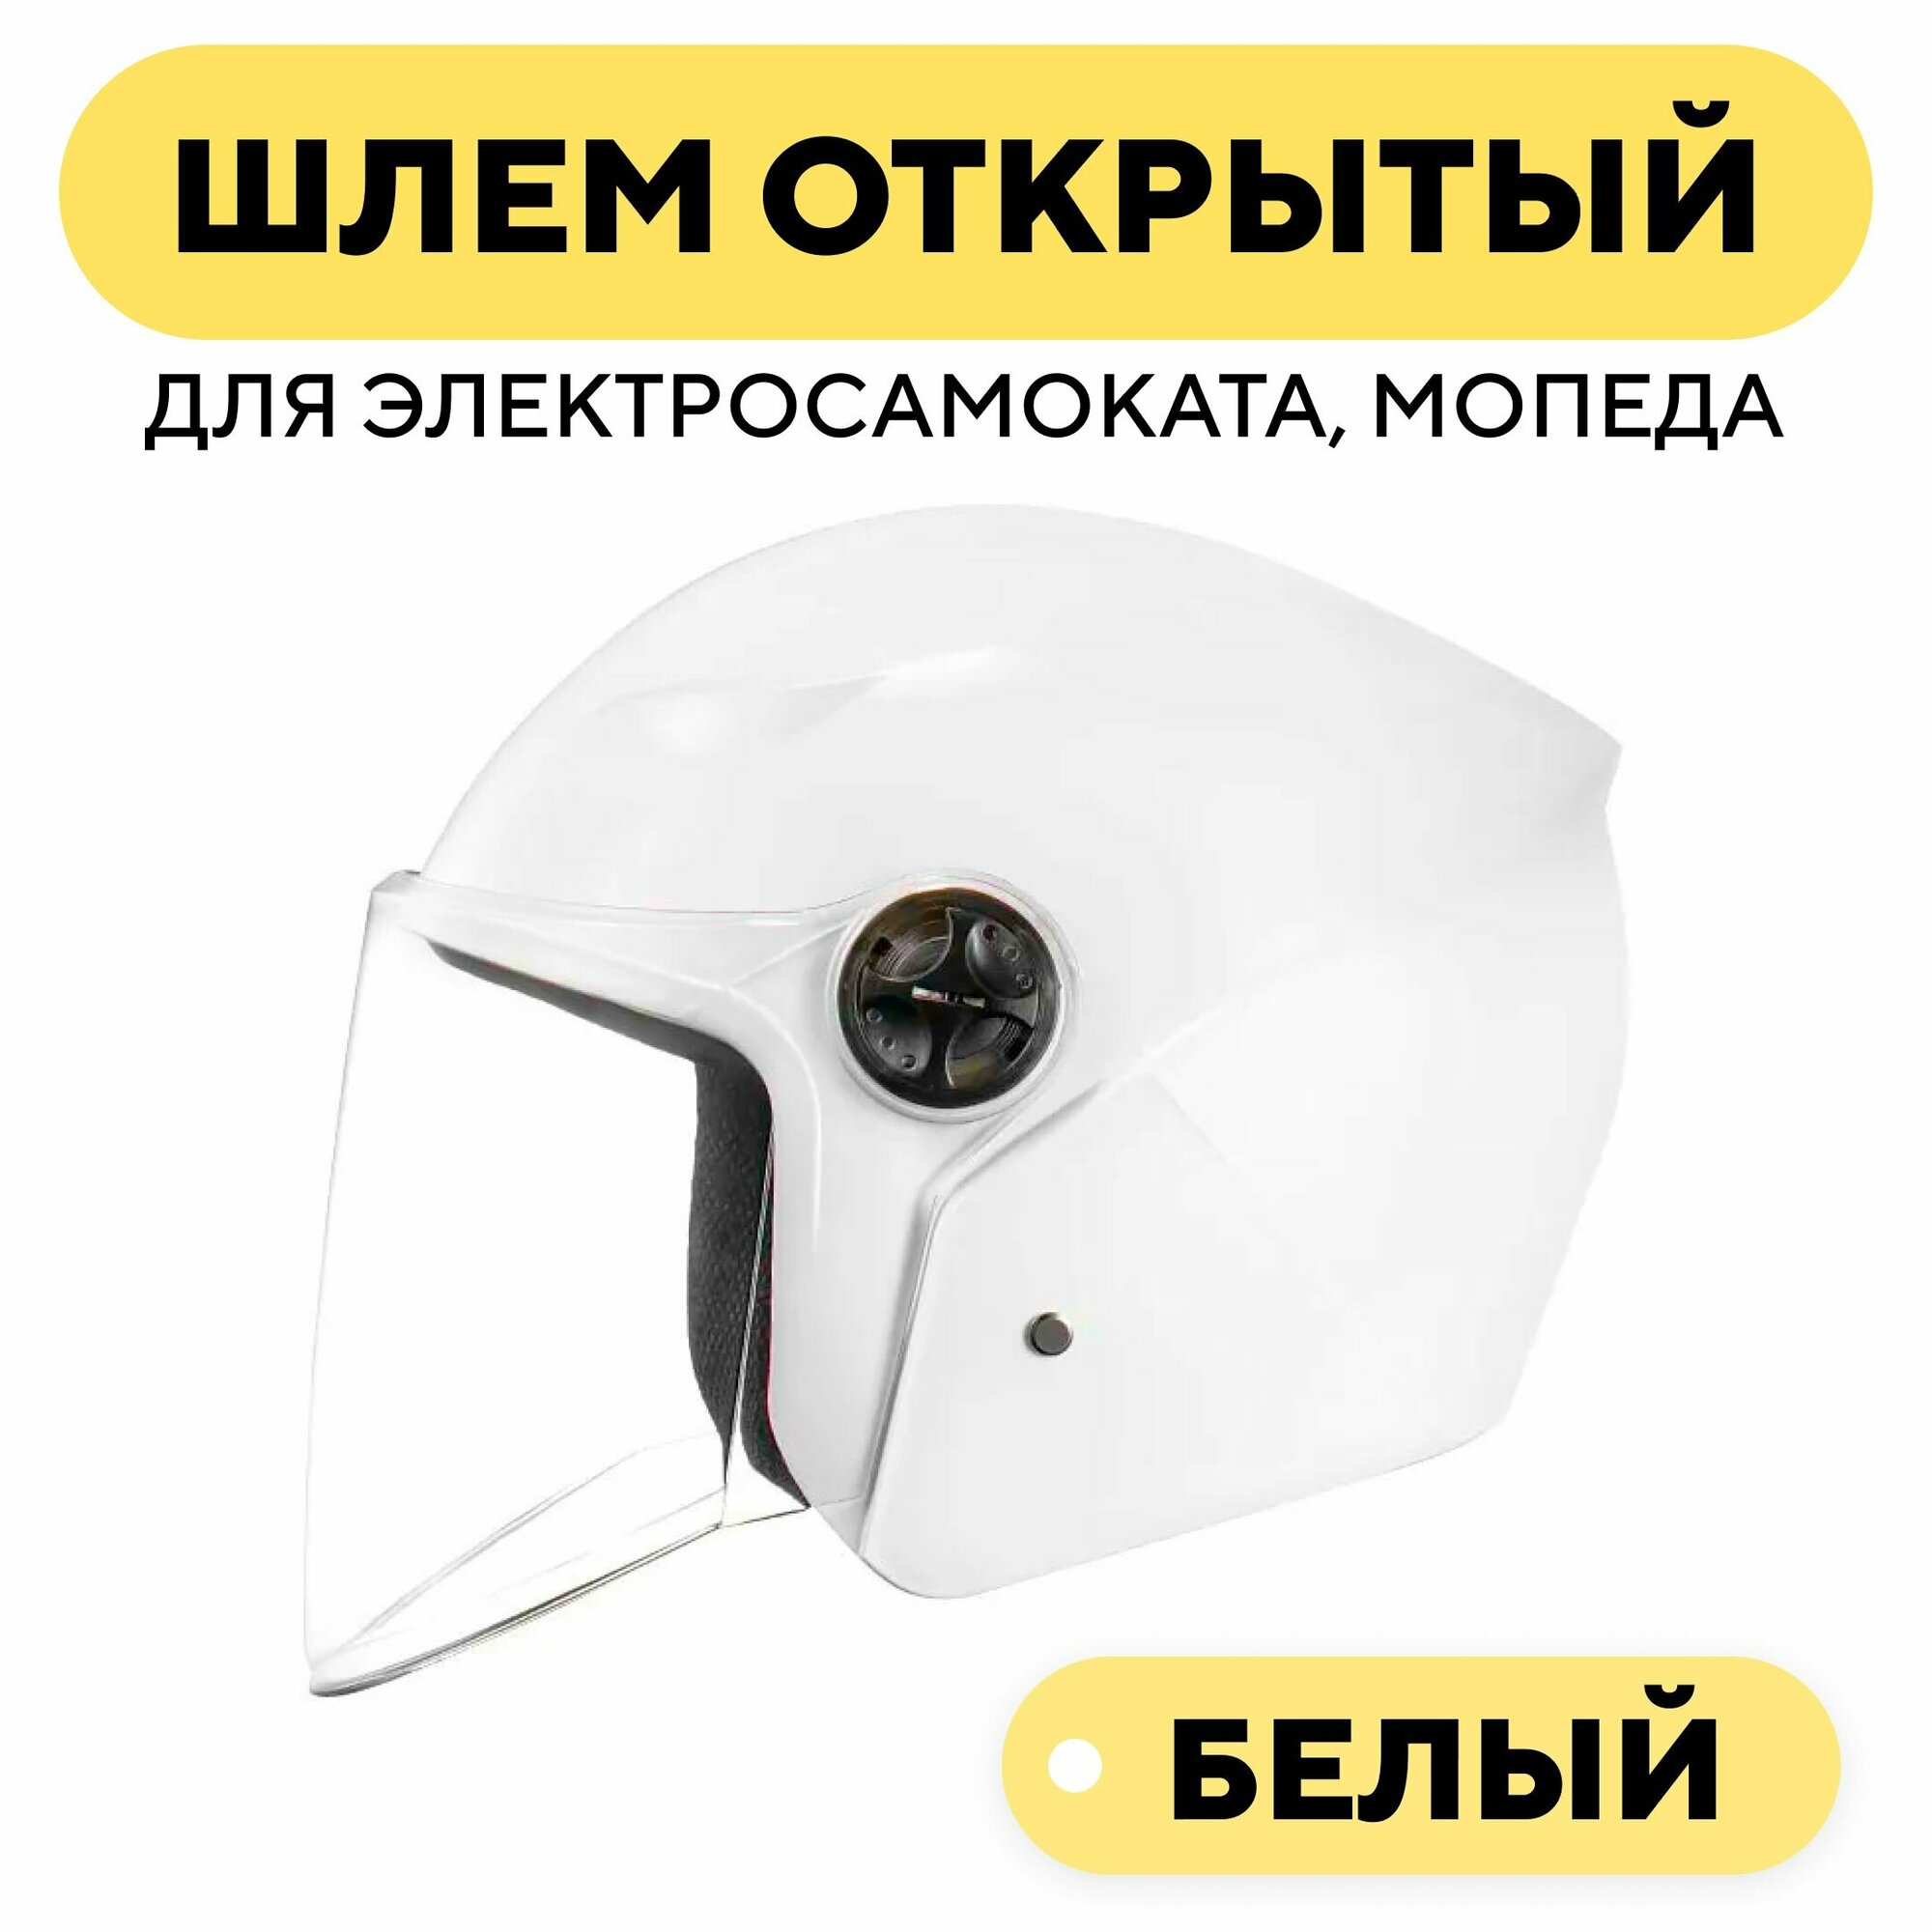 Шлем открытый для электросамоката мопеда - Белый